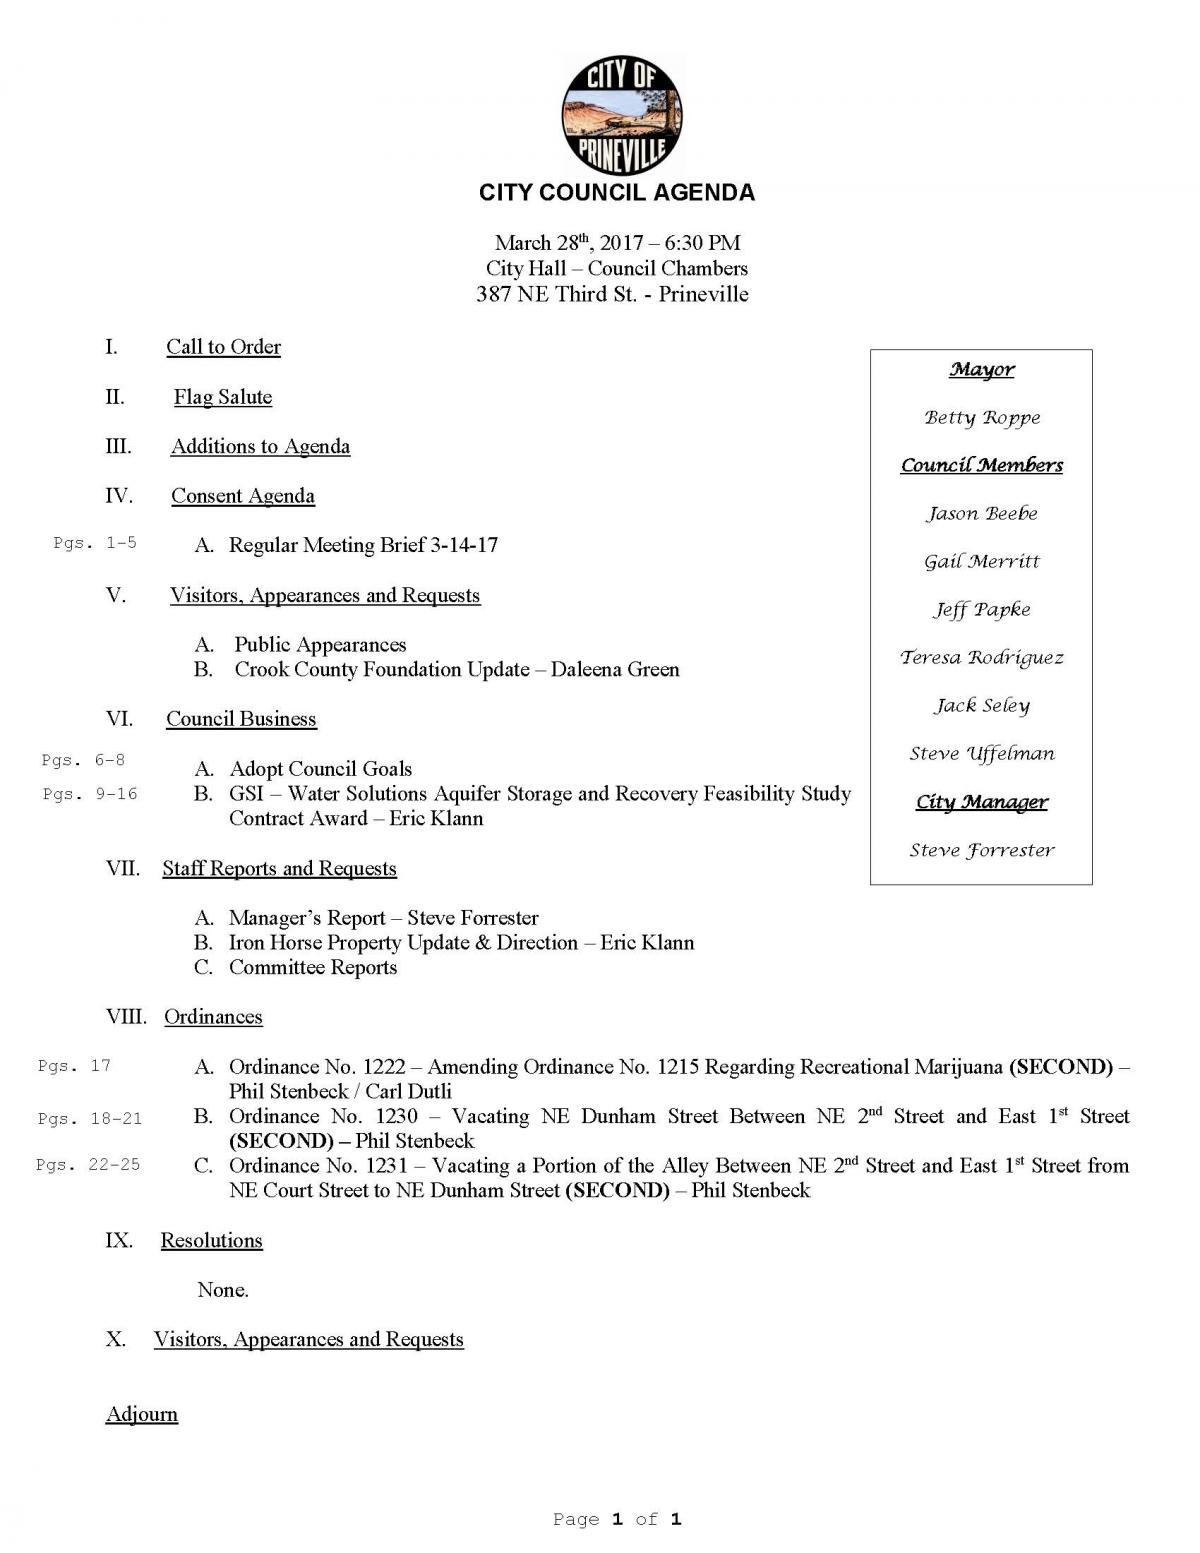 Council Agenda 3-28-17